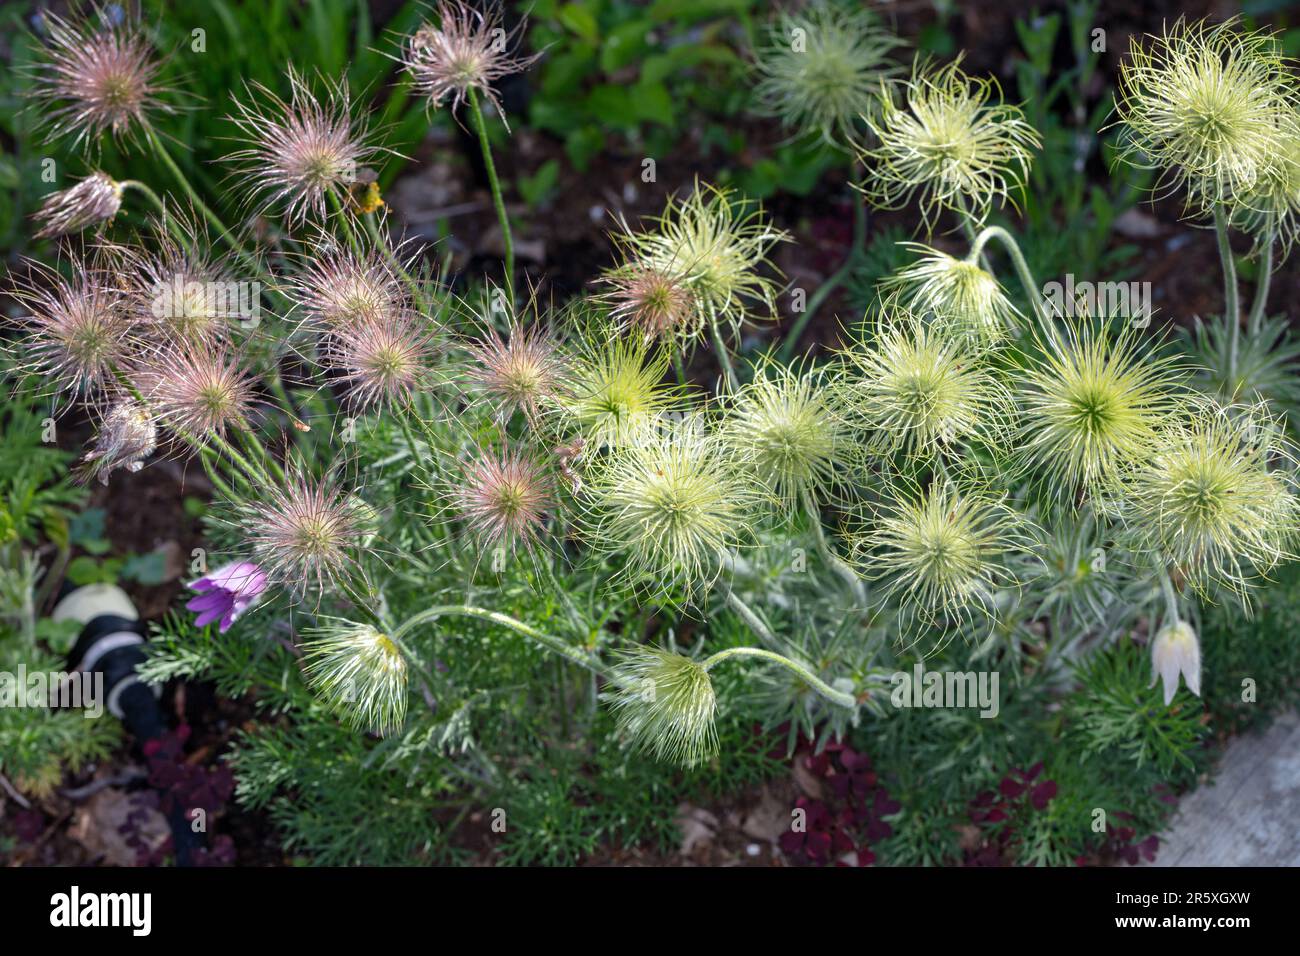 'Alba' Pasque flower, Backsippa, (Pulsatilla vulgaris) Stock Photo